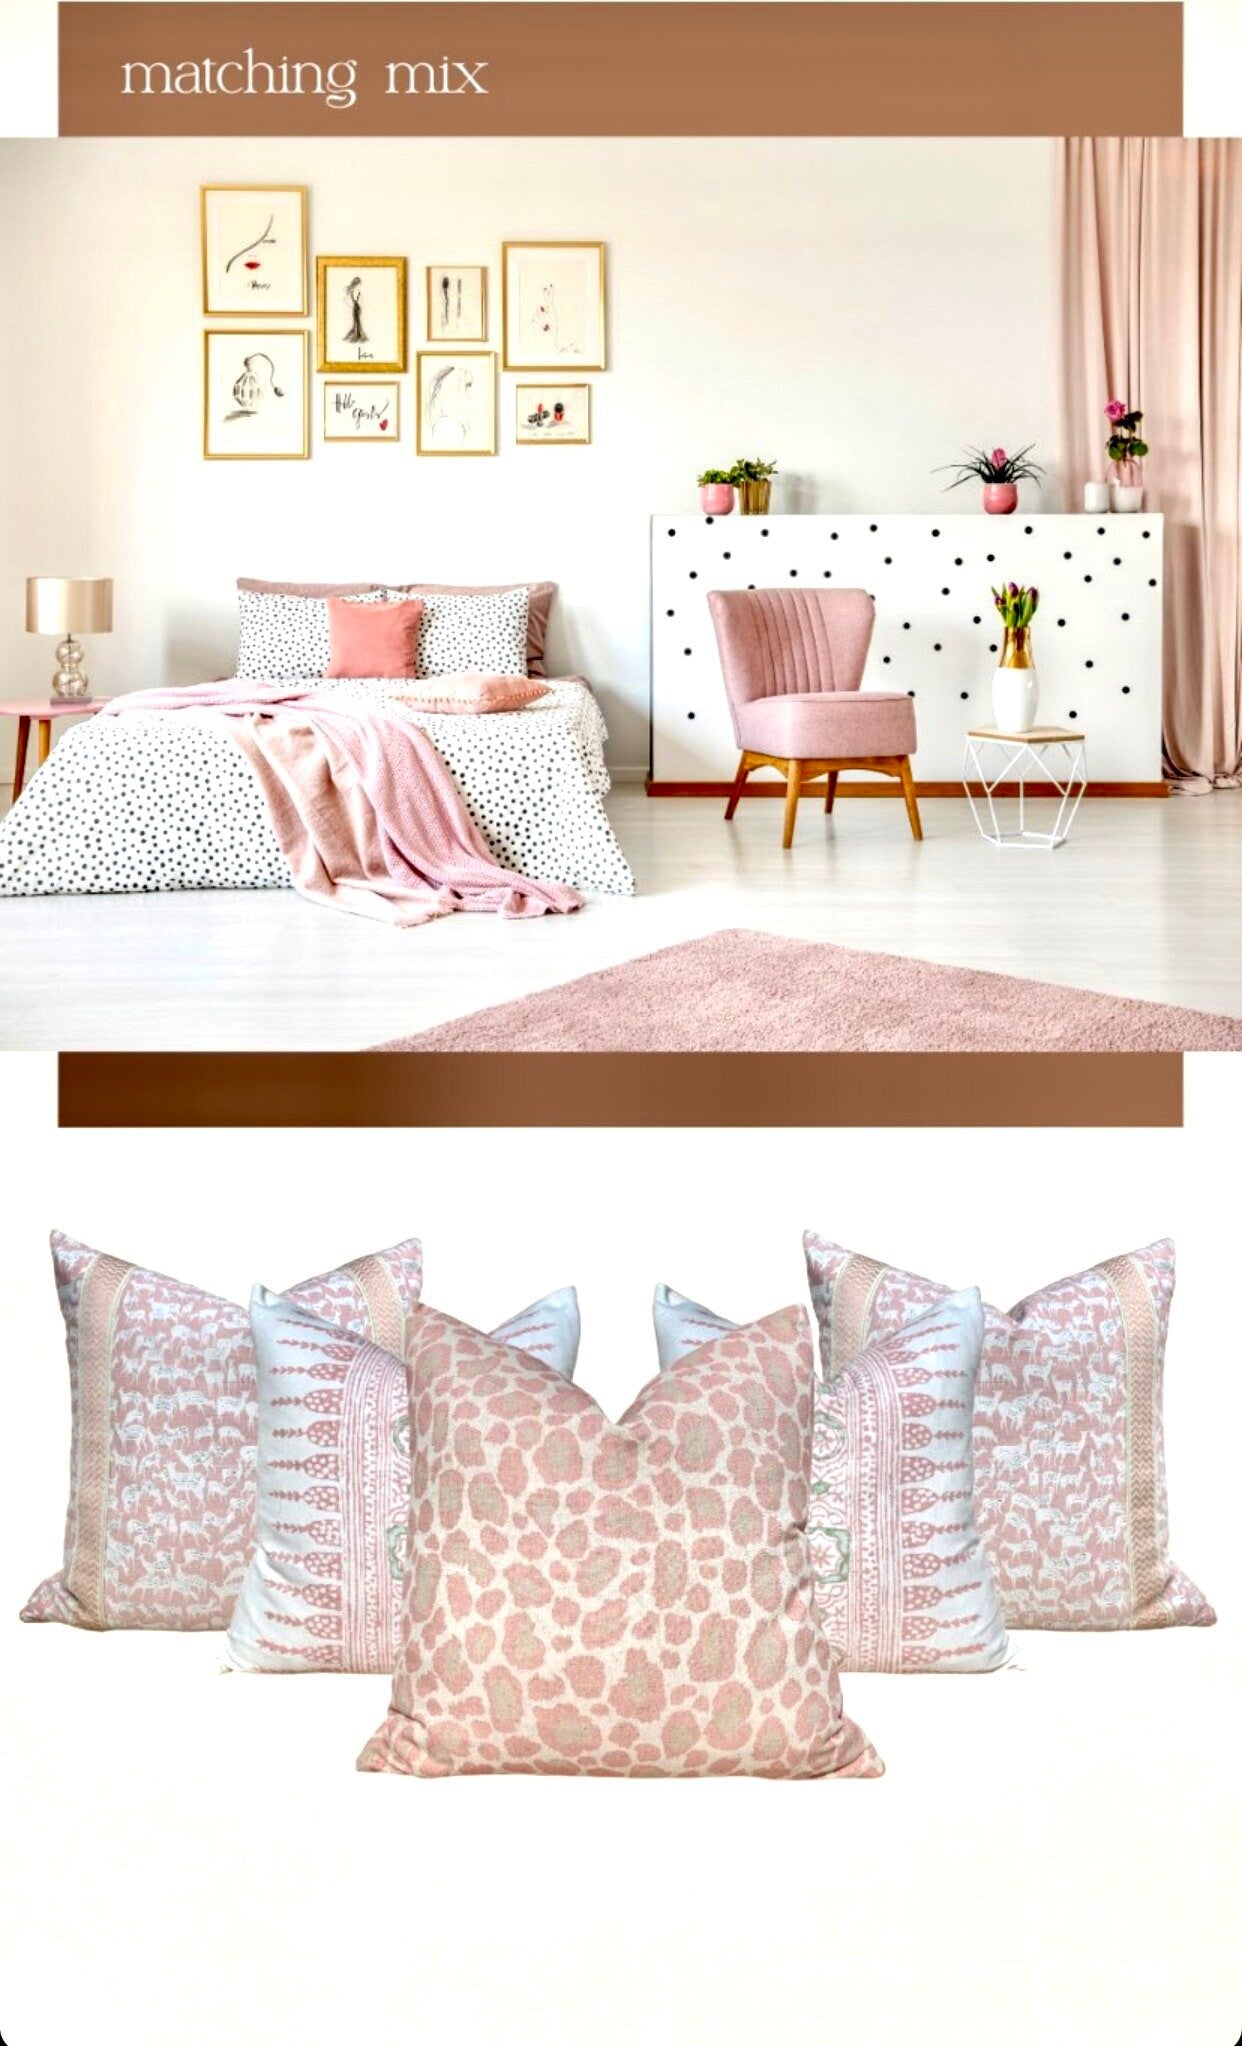 Schumacher Fauna Pillow in Blush. Decorative Pillow, accent throw cushion, designer pillow cover, lumbar accent pillow.